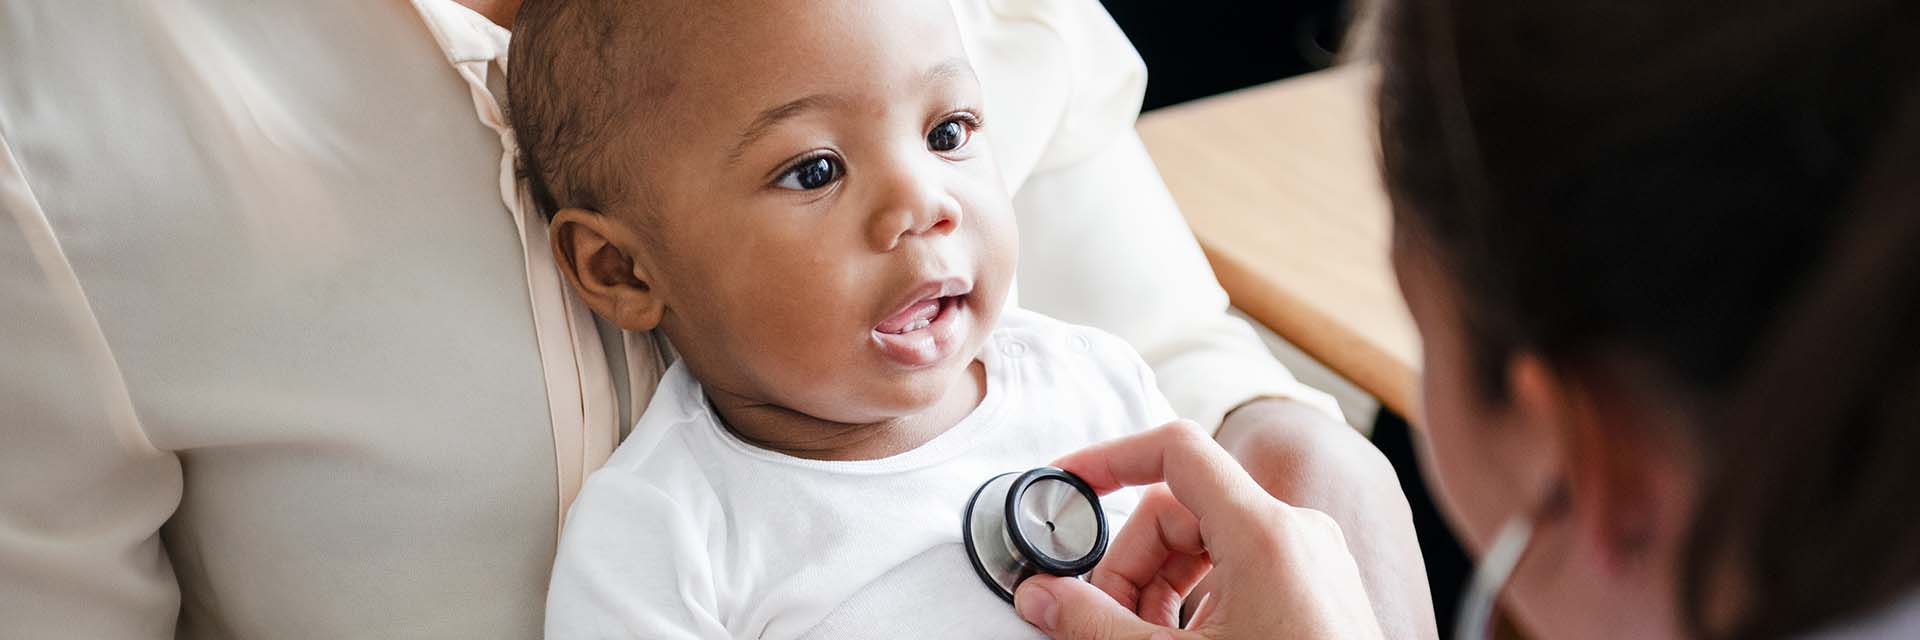 Provider using stethoscope on baby